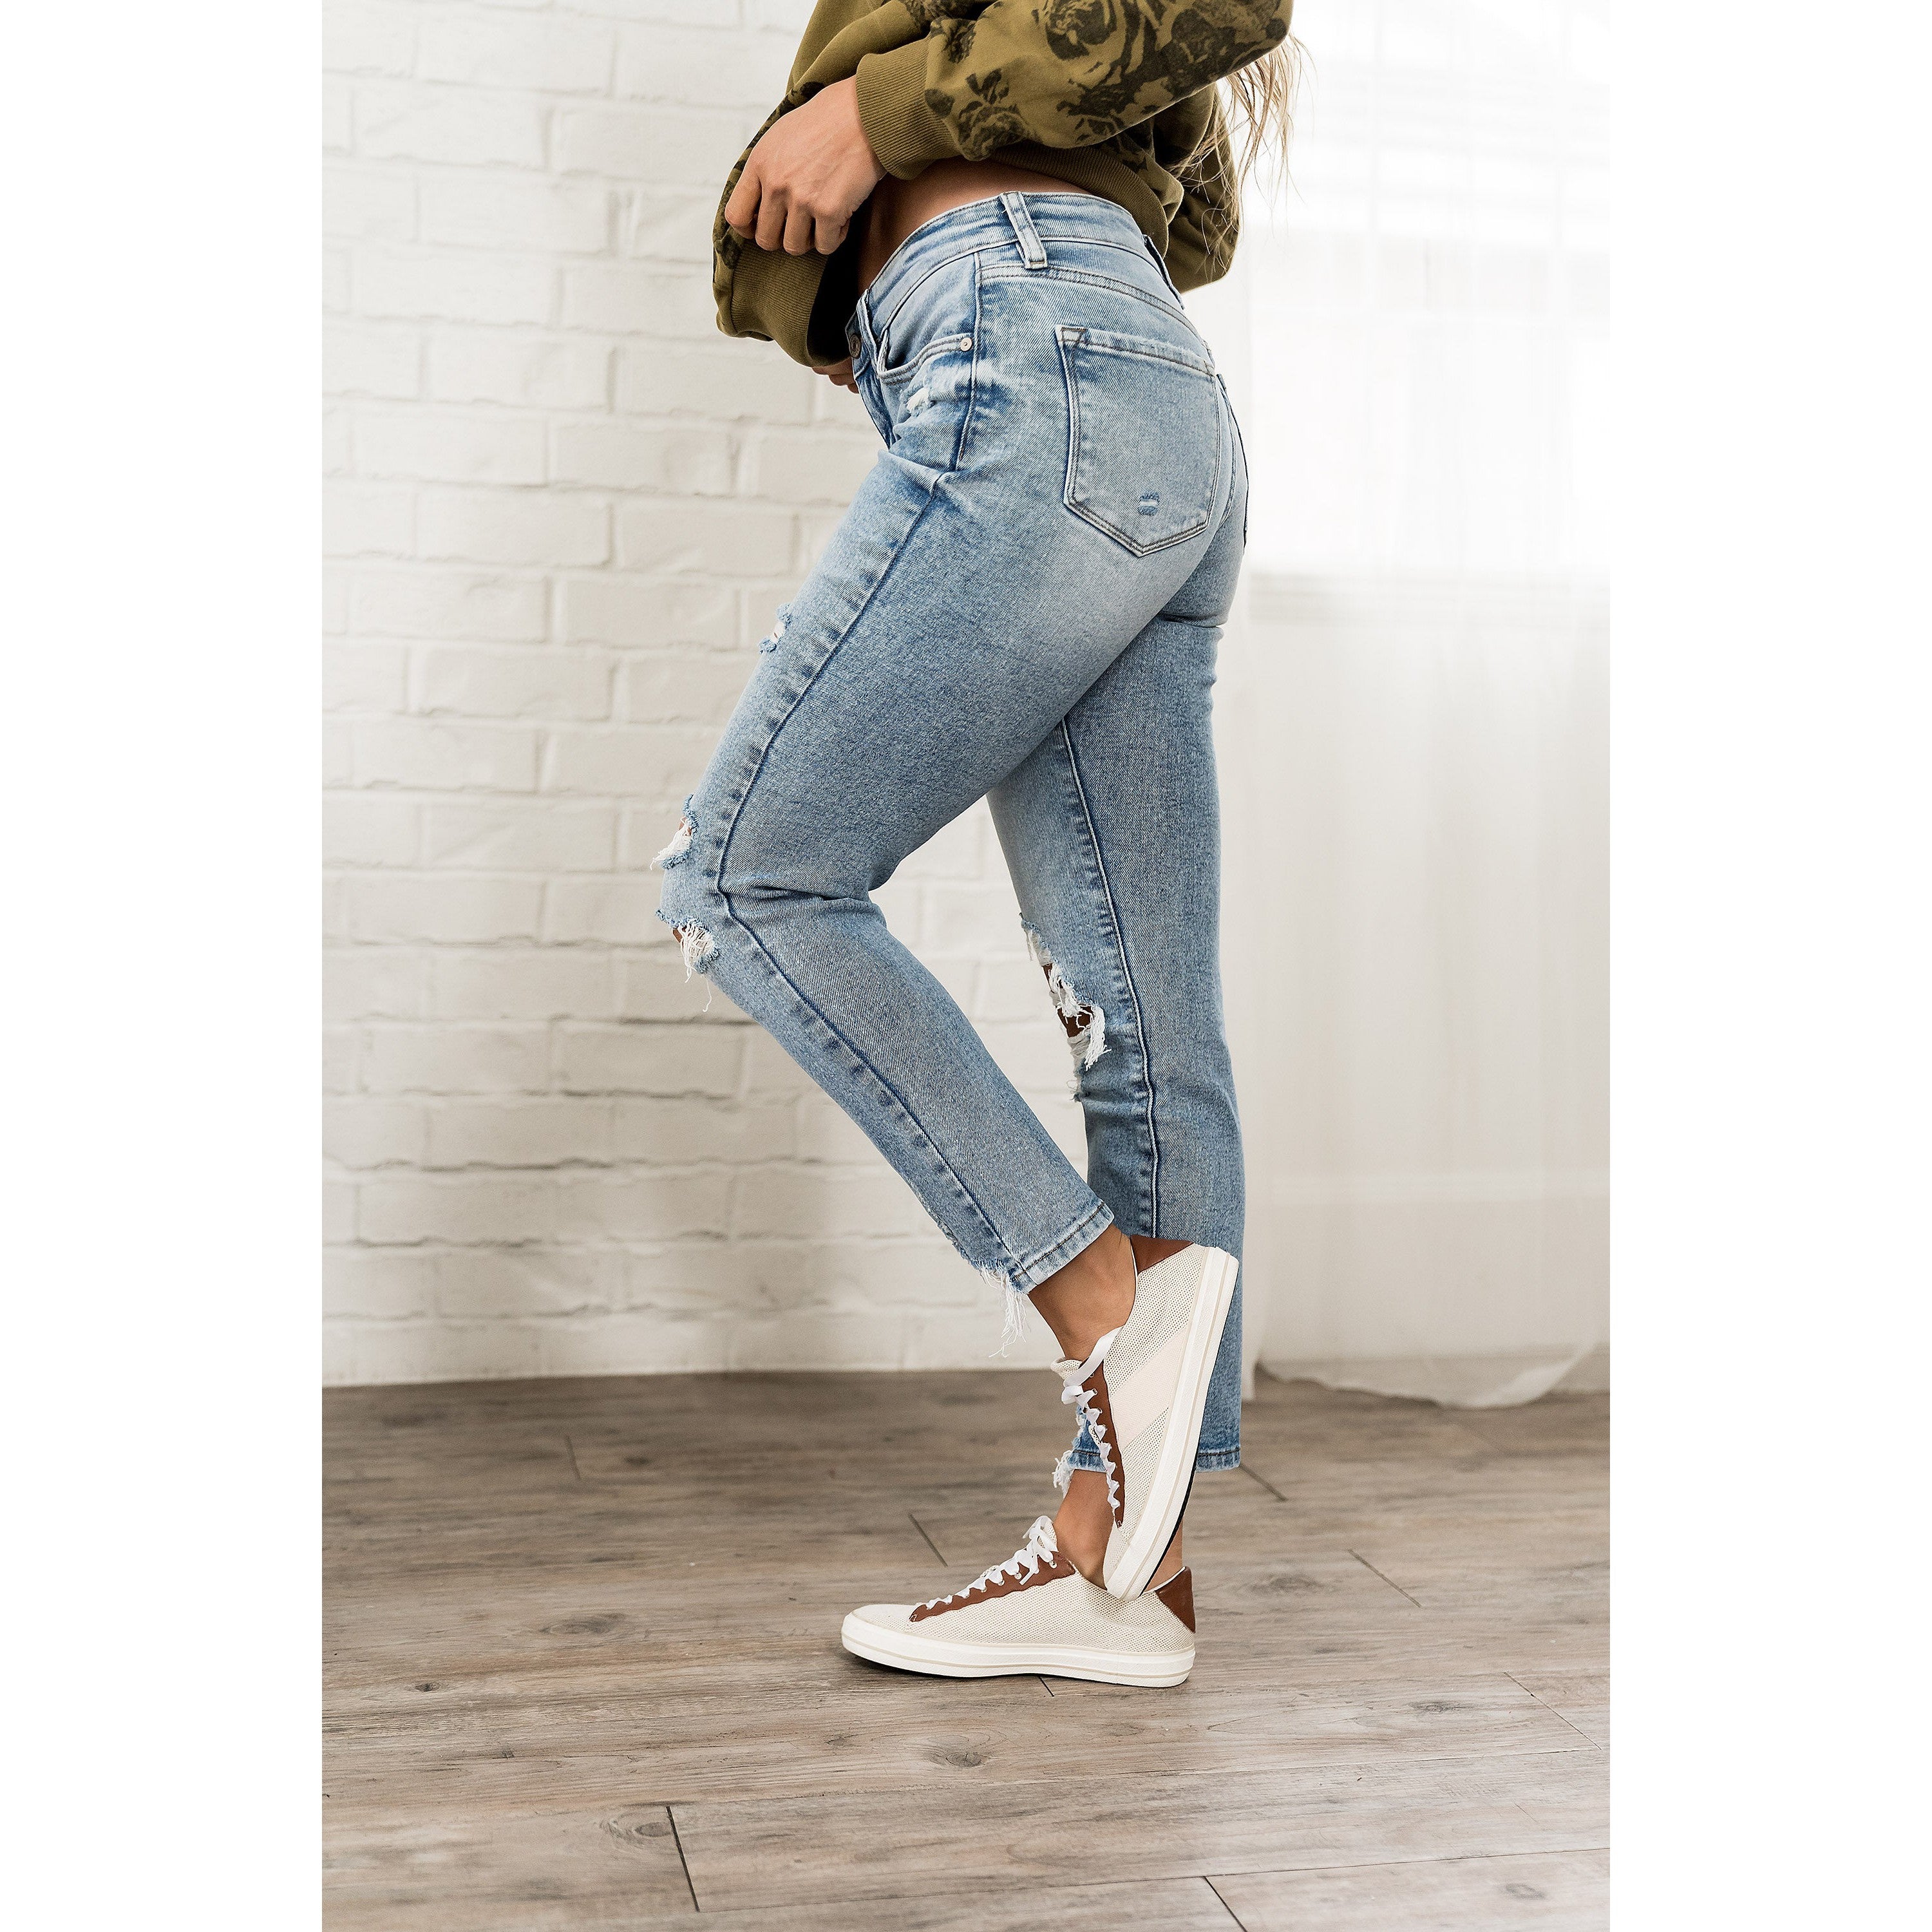 Ampersand Women's 621 High Rise Slim Straight Jeans - Medium Wash